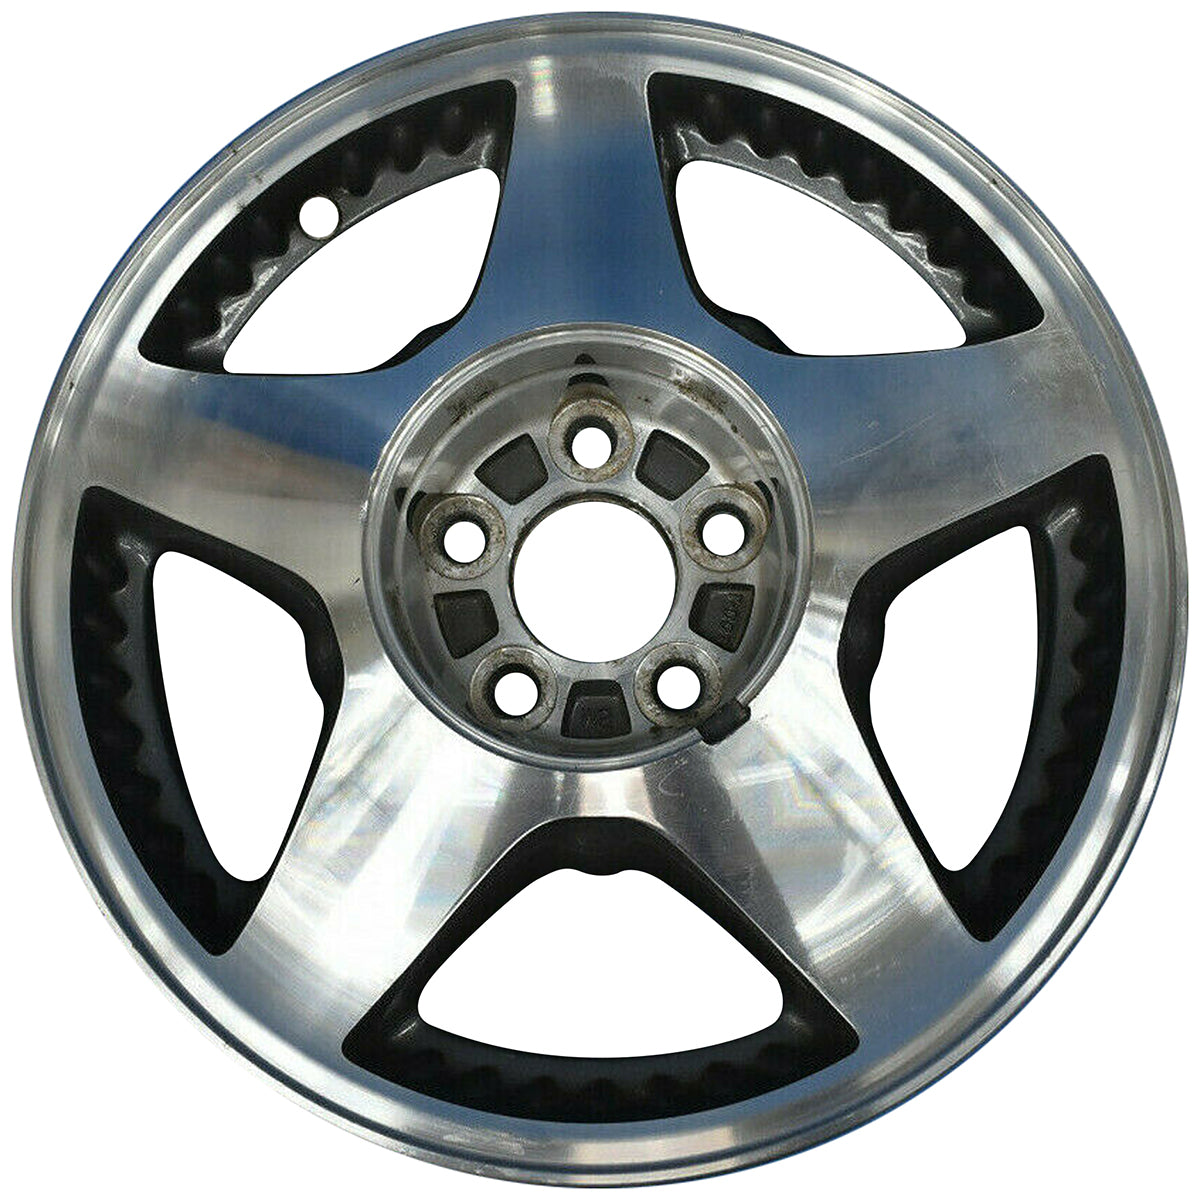 2001 Ford Windstar 16" OEM Wheel Rim W3565US